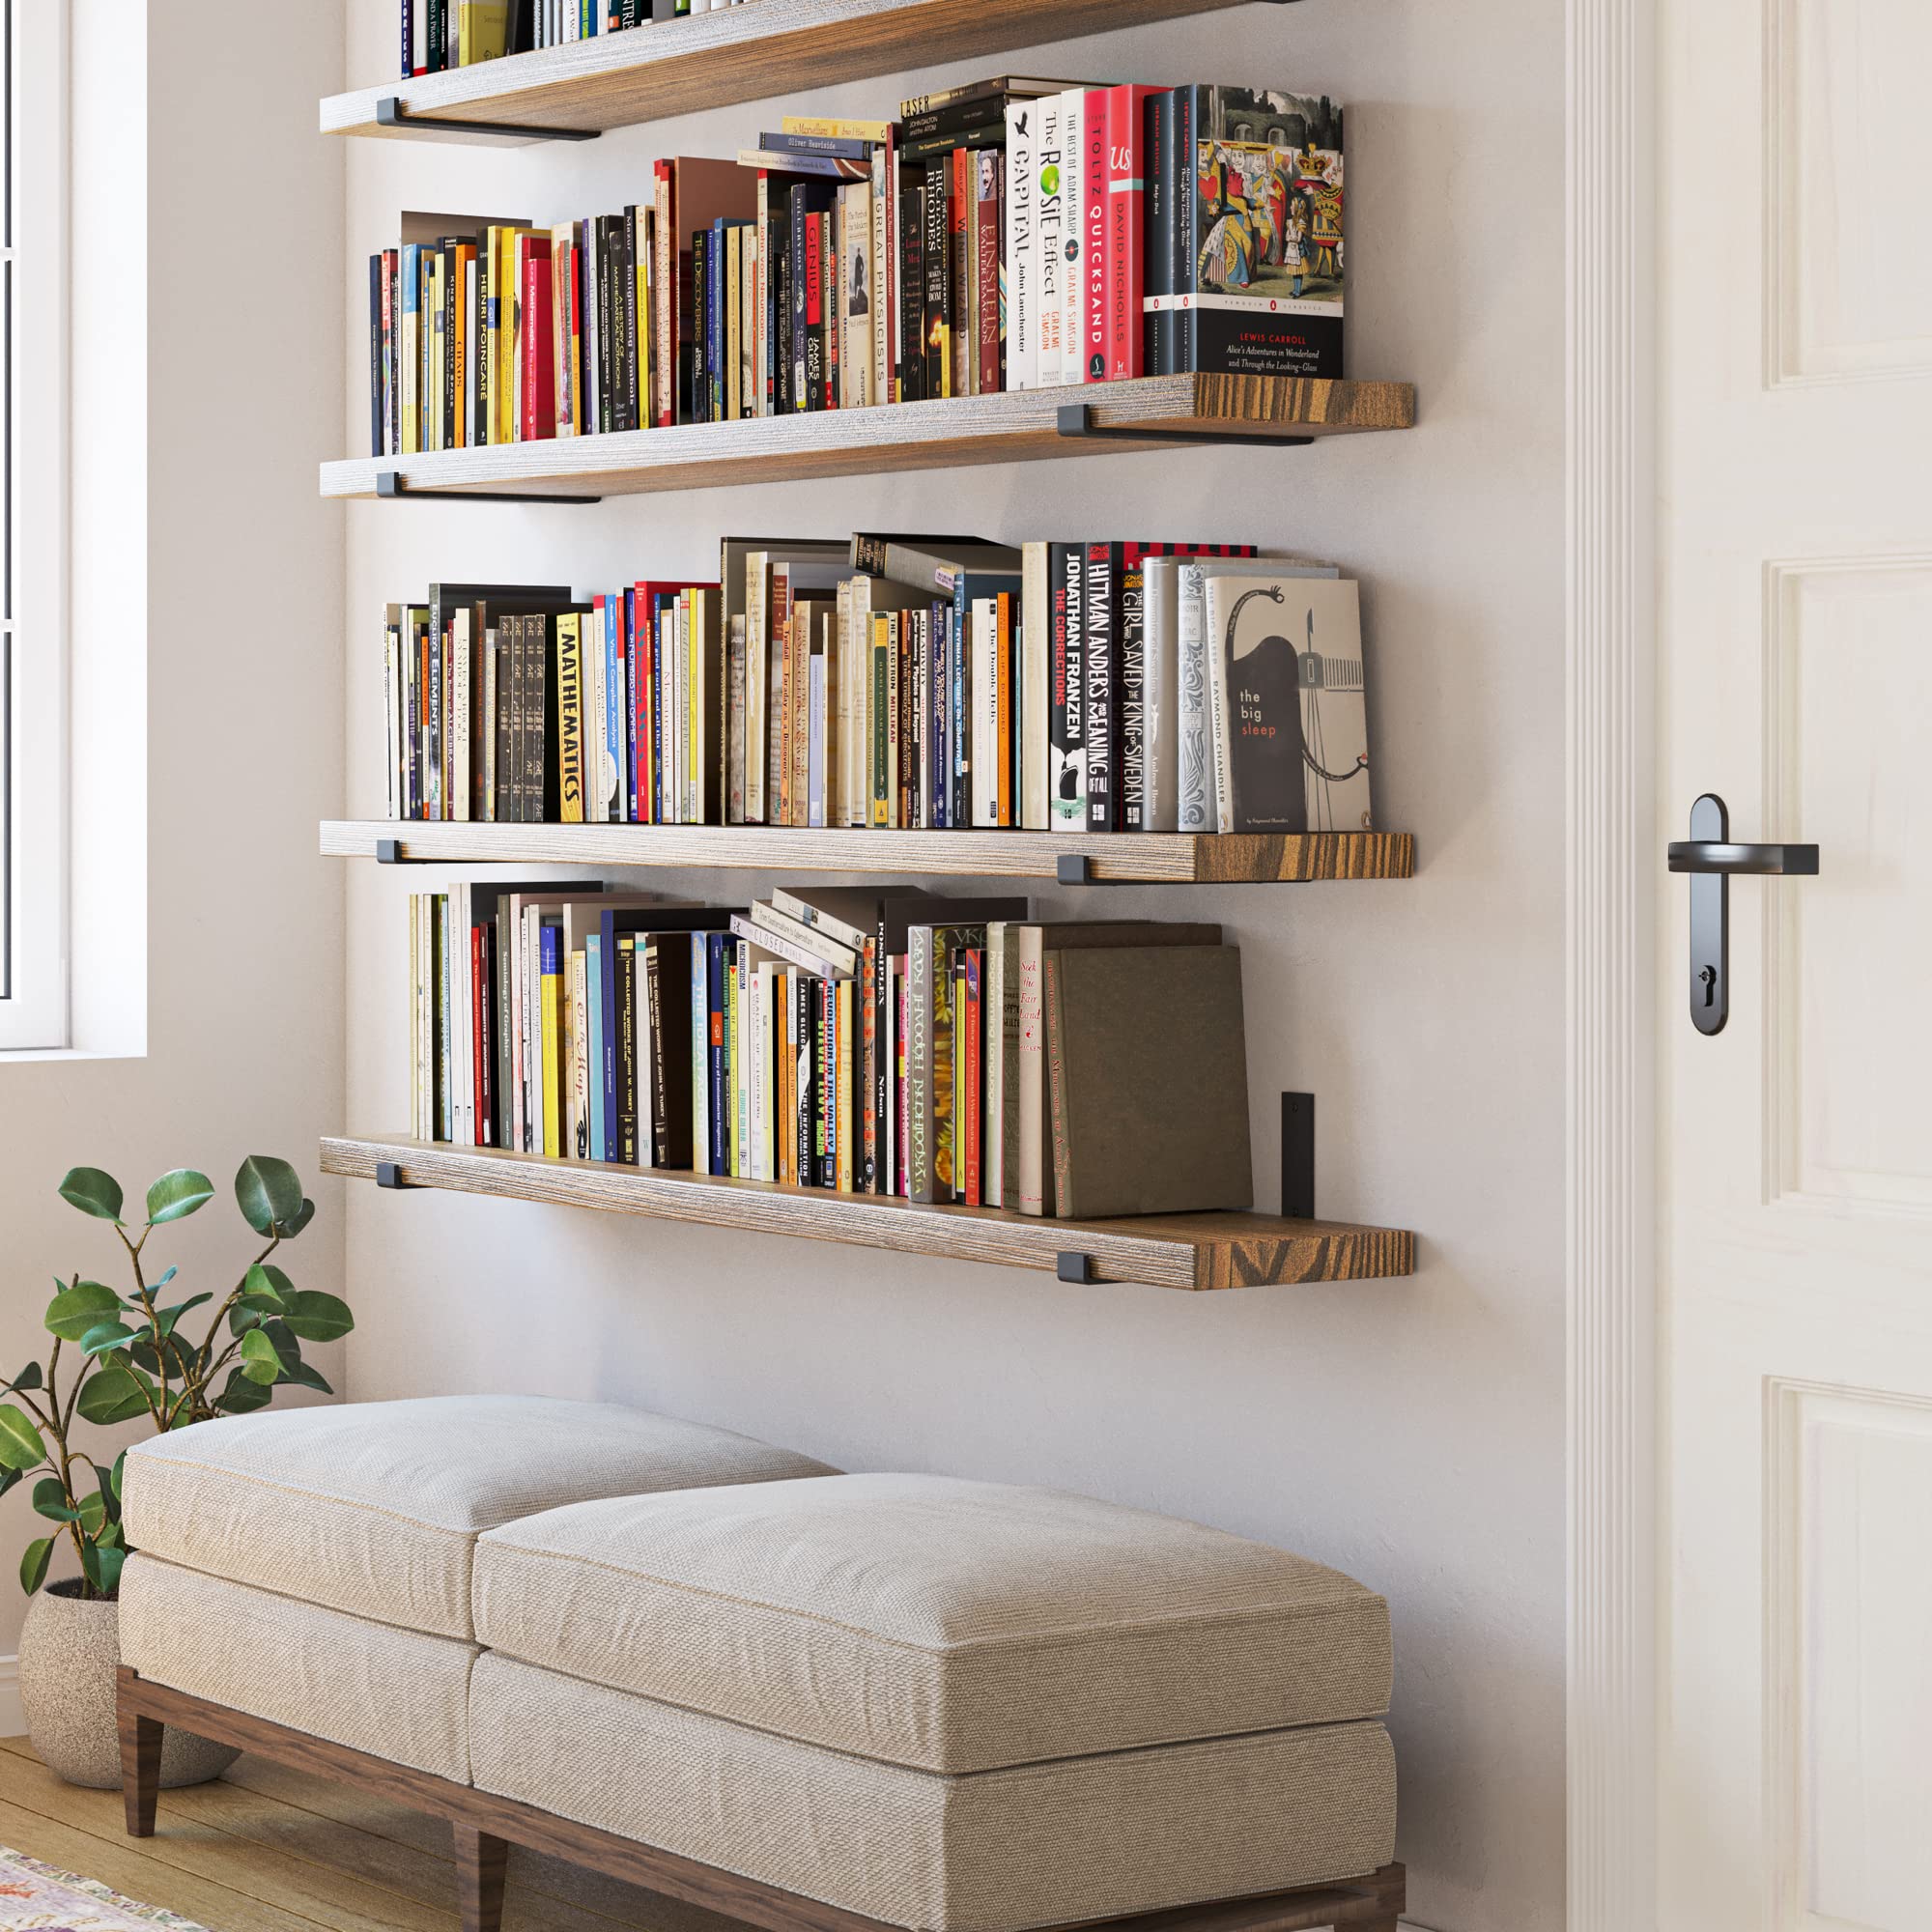 how to secure bookshelf to wall